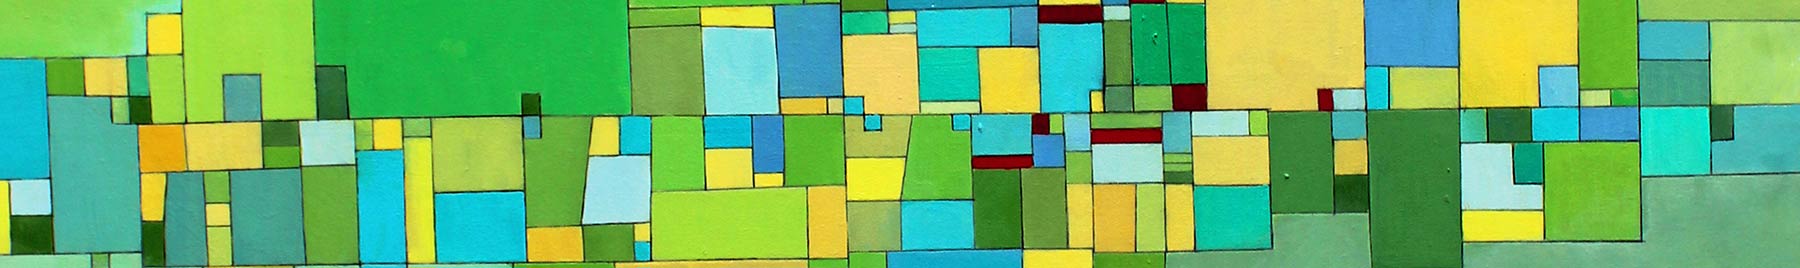 Deborah Batt, Rural Decay, detail. Painting of geometric shapes in green, blue, and gold.